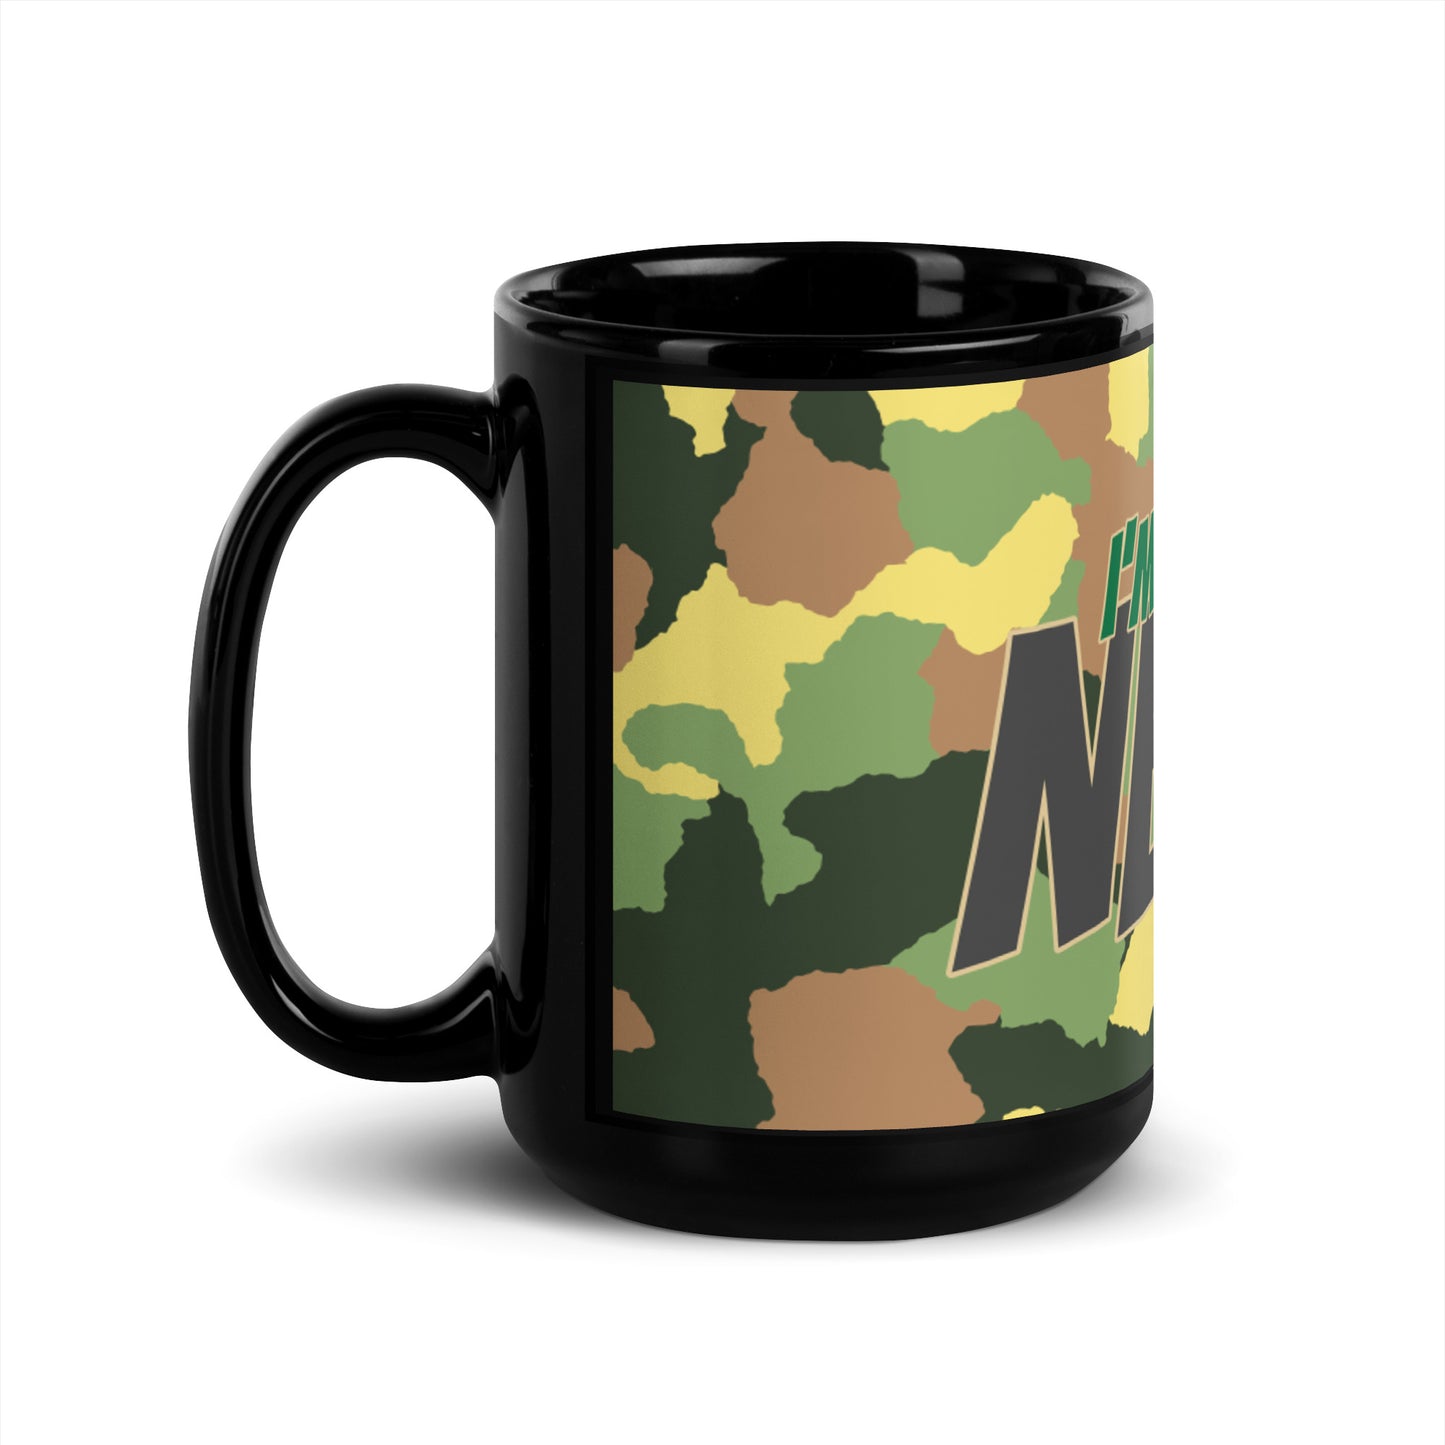 Army Camo Black Glossy Mug - I'm over it. Next!